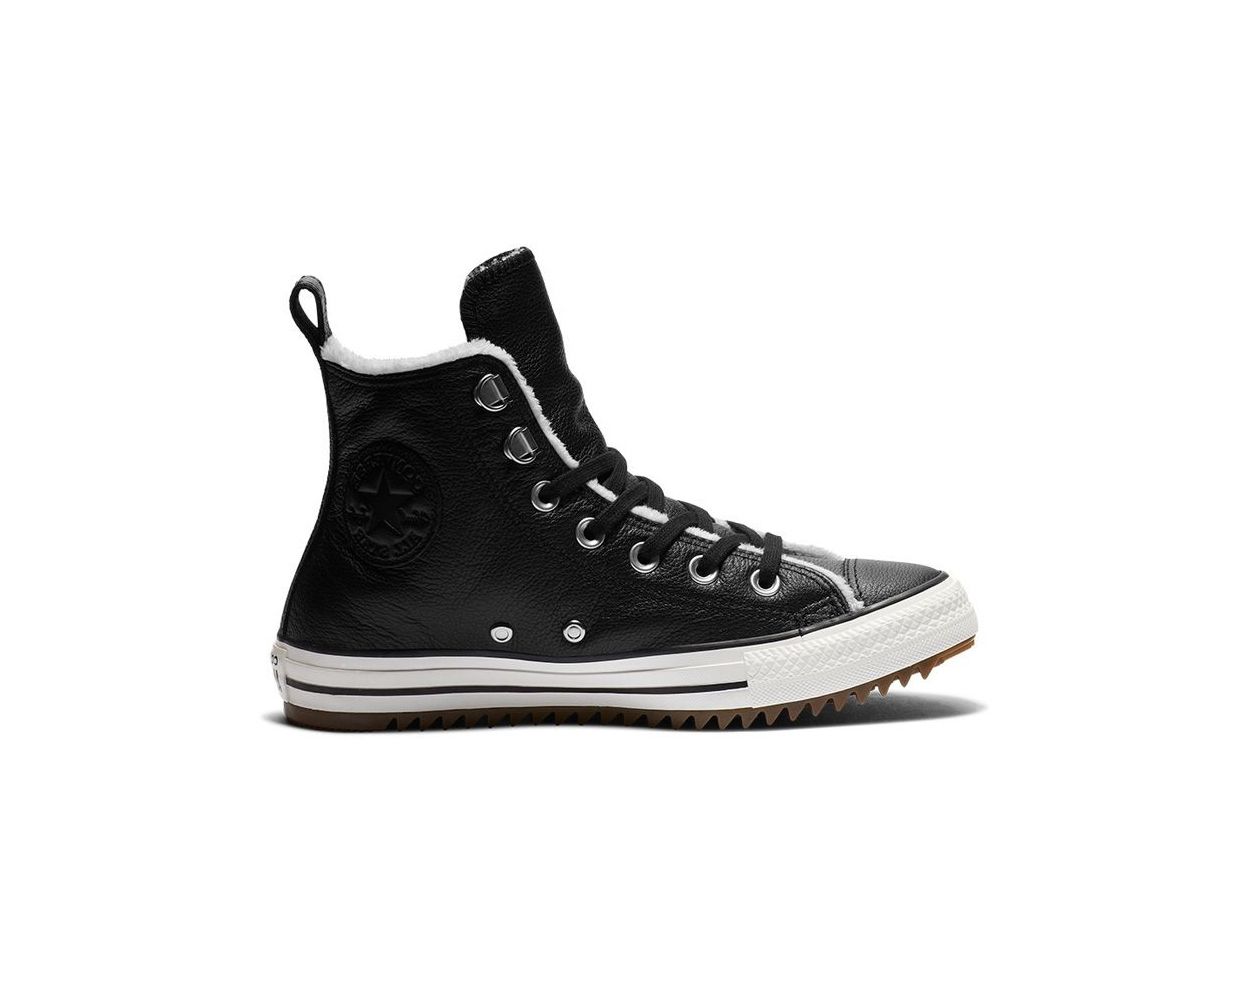 Converse Chuck Taylor All Star Hiker Boot in Black/Egret/Gum | UJB Canada